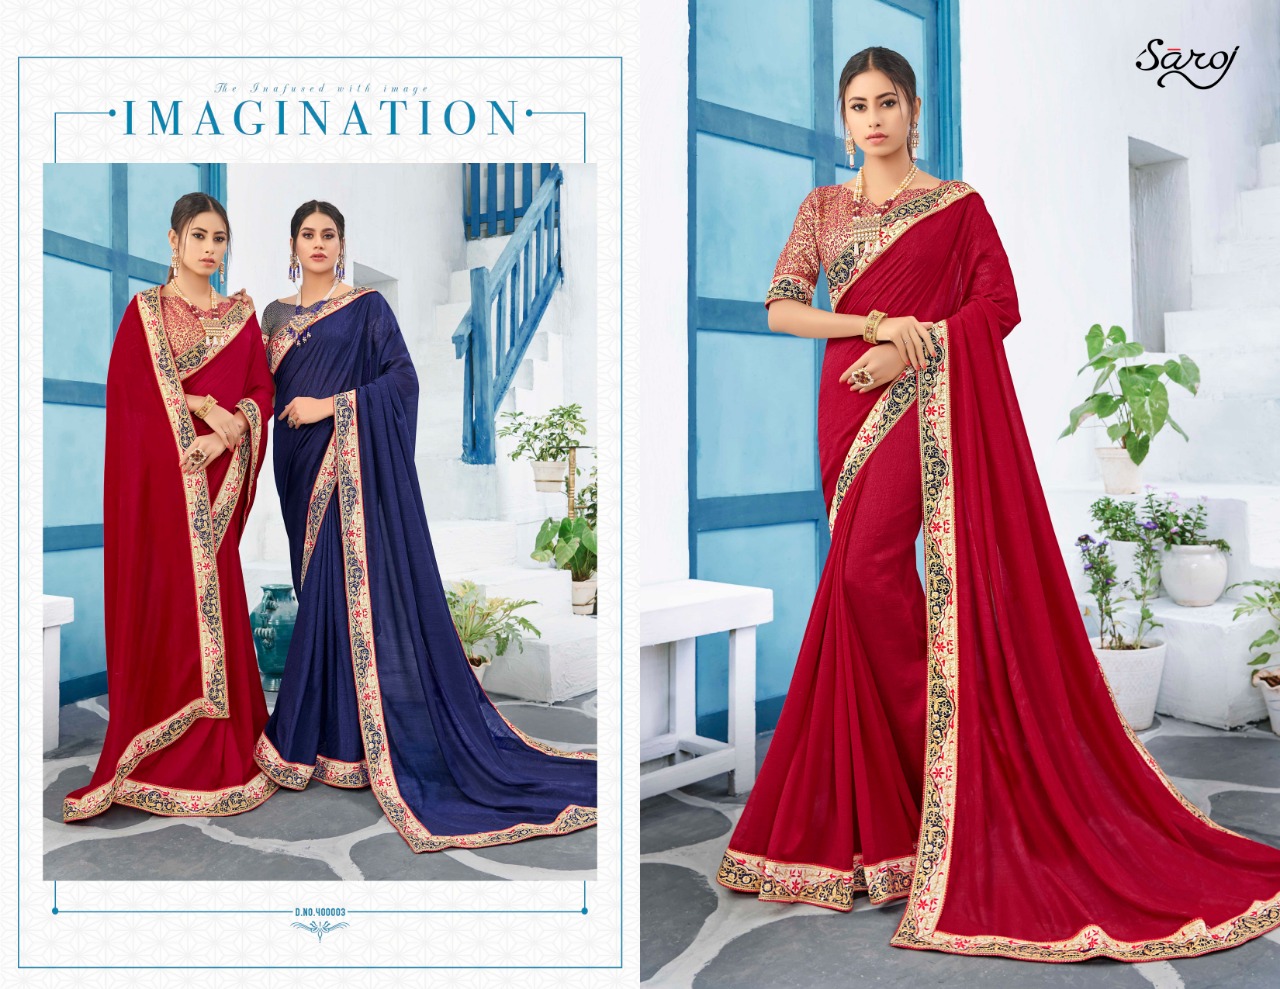 saroj urvashi colorful fancy collection of sarees